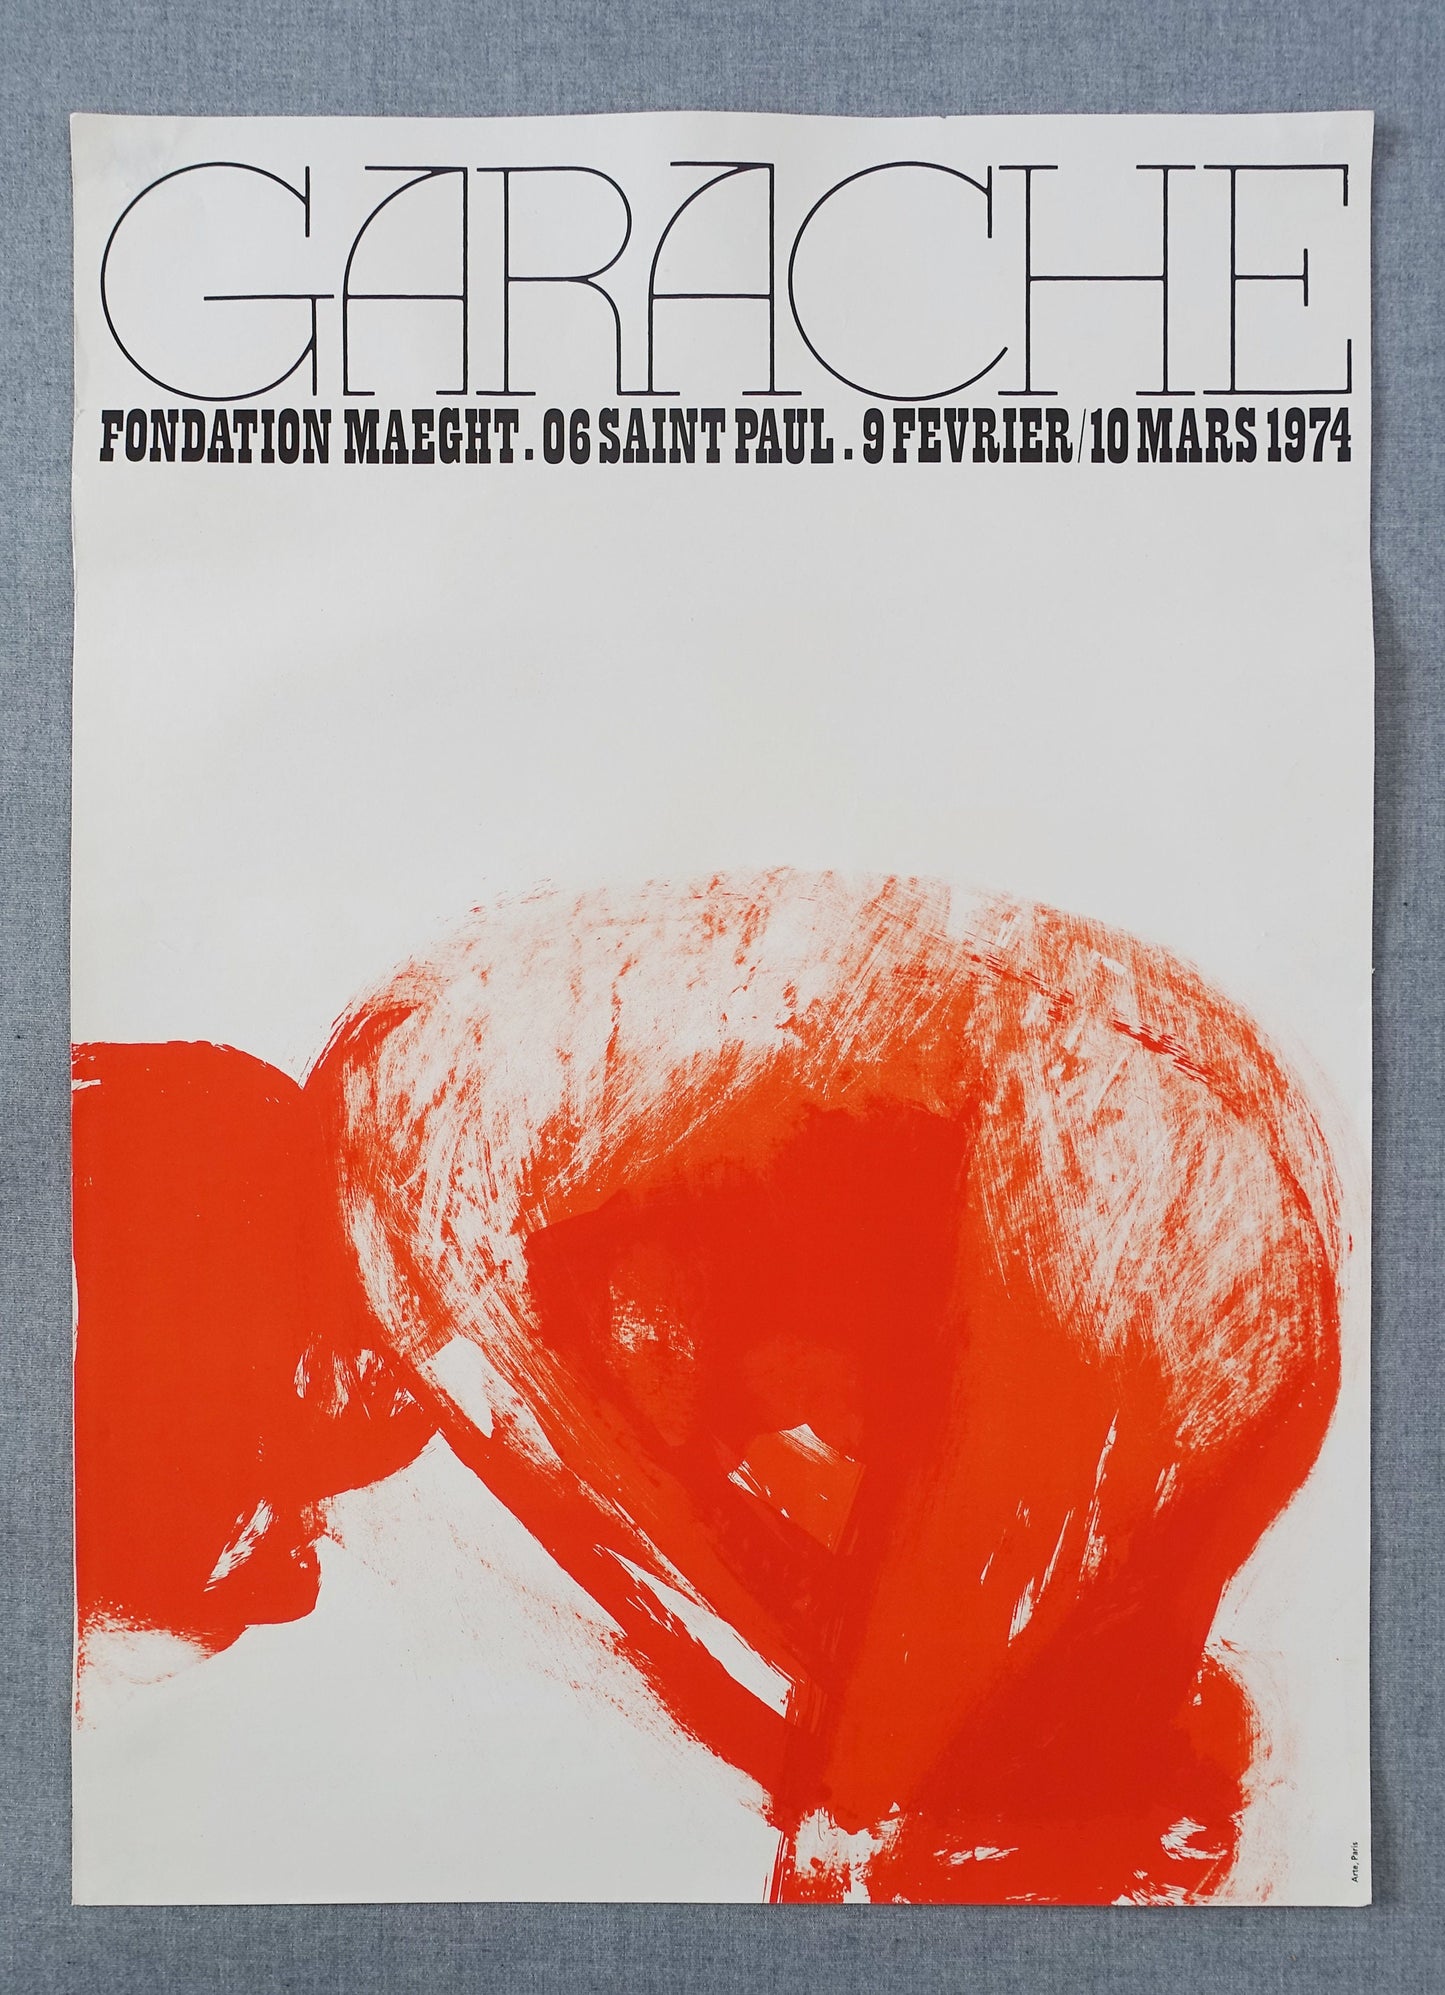 1974 Garache Erotic Exhibition Poster Fondation Maeght - Original Vintage Poster